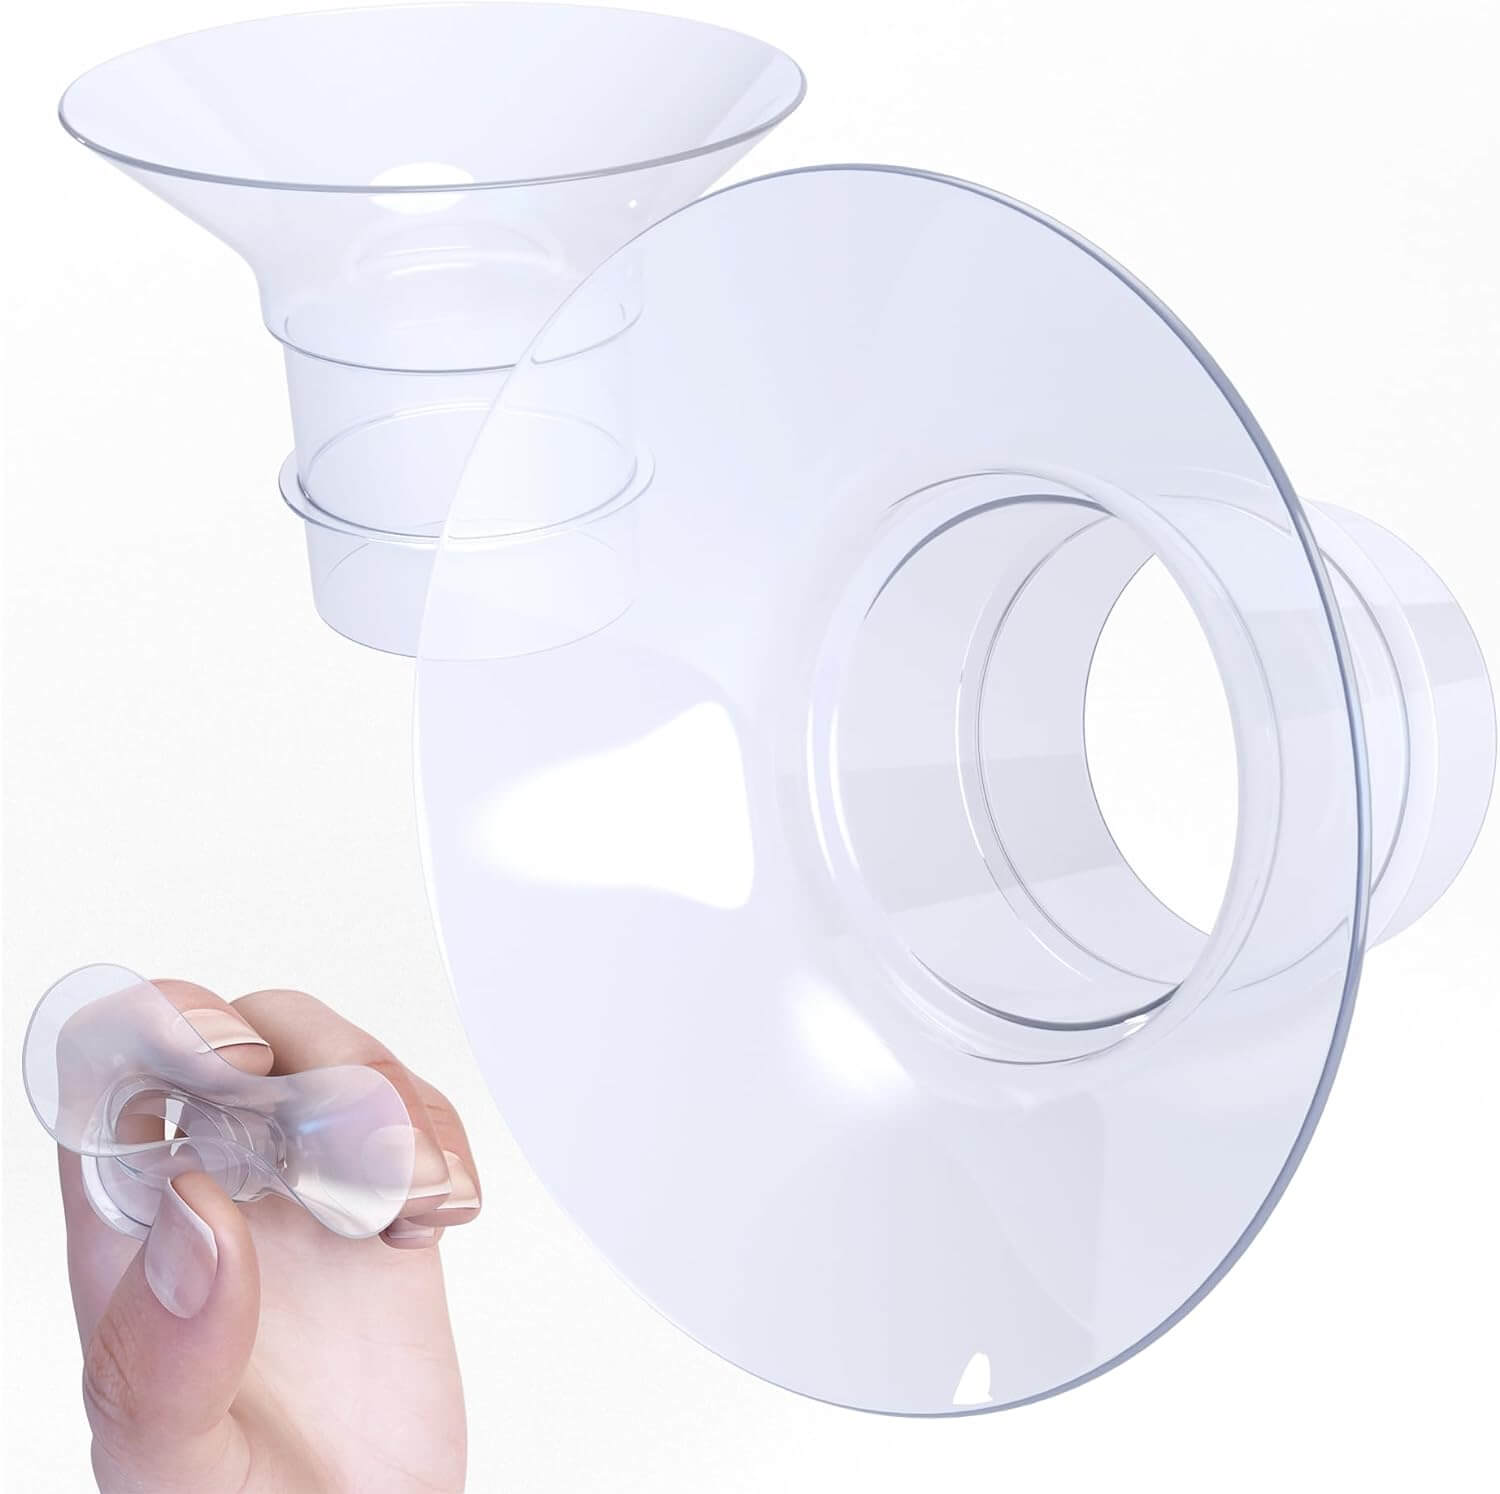 Manual Breast Pump, Adjustable Suction Silicone Hand Pump